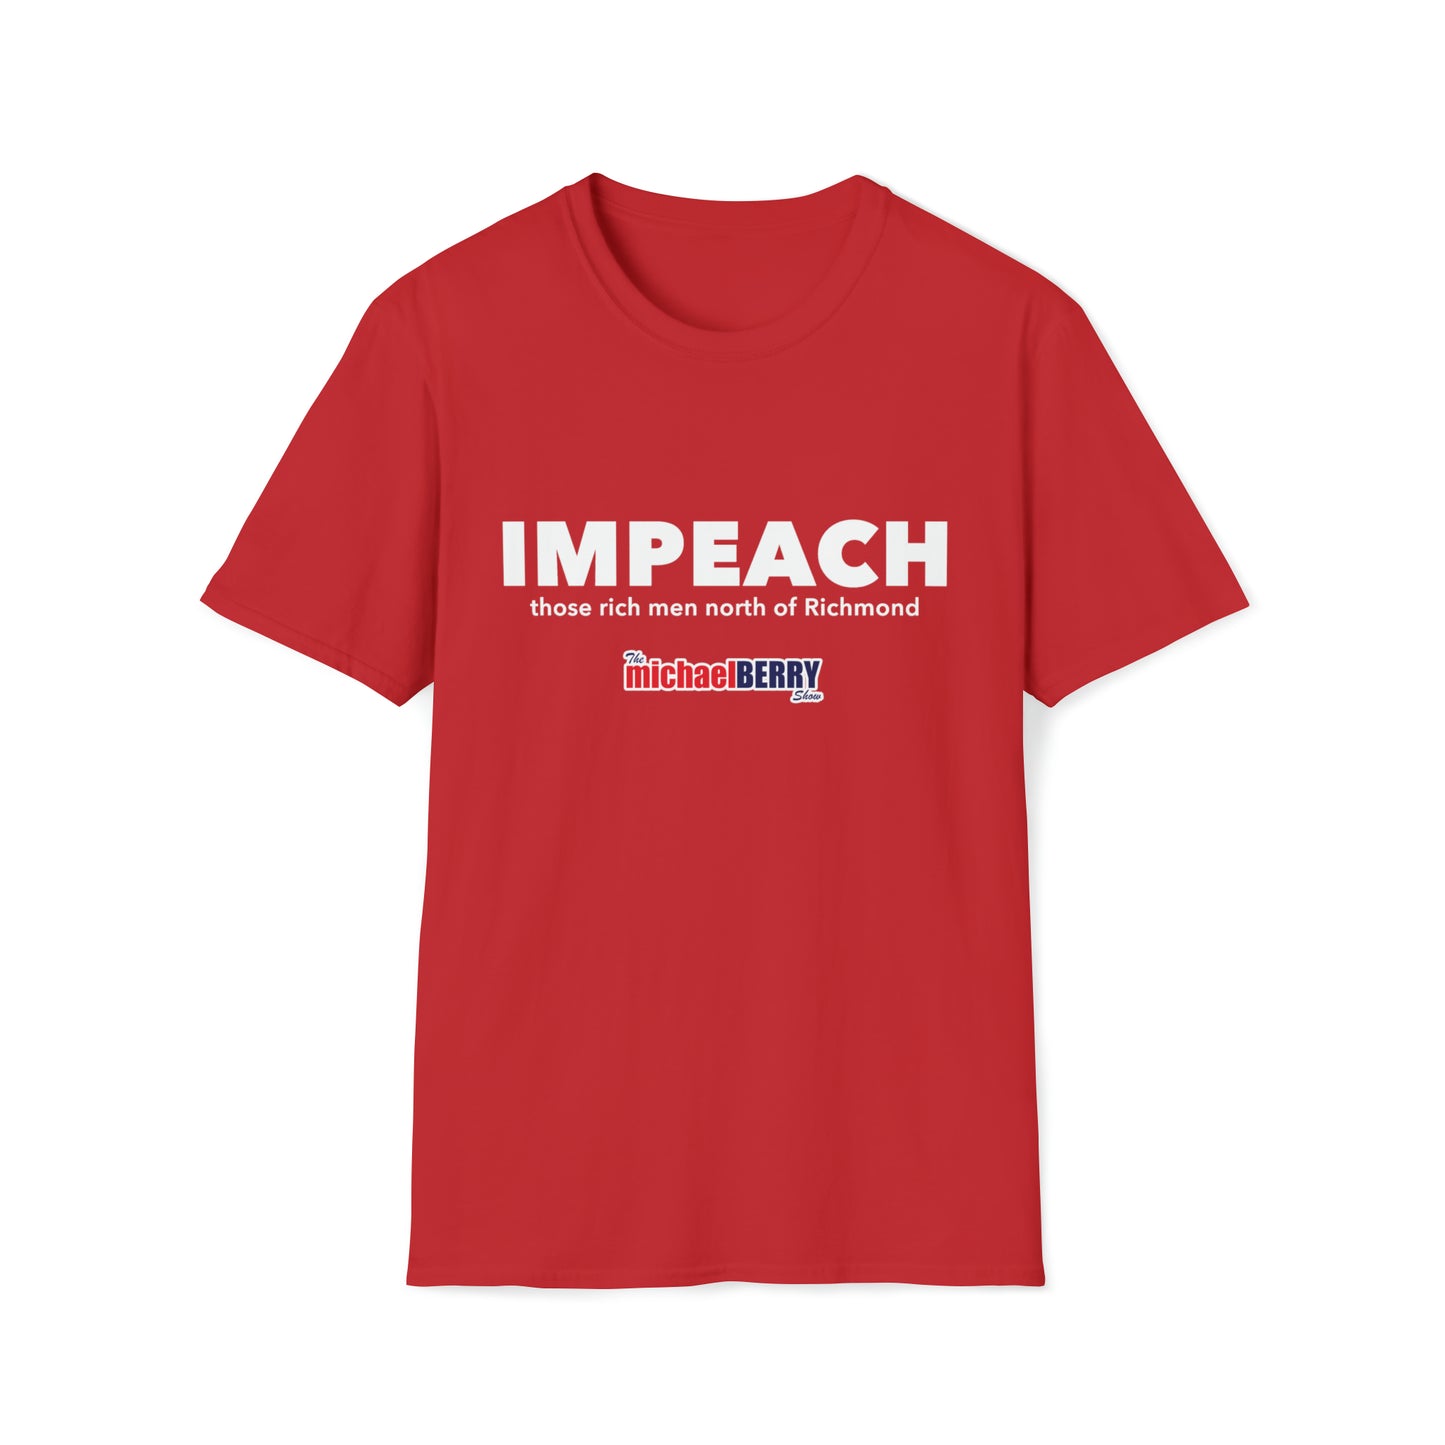 Impeach Those Rich Men North of Richmond - T-Shirt